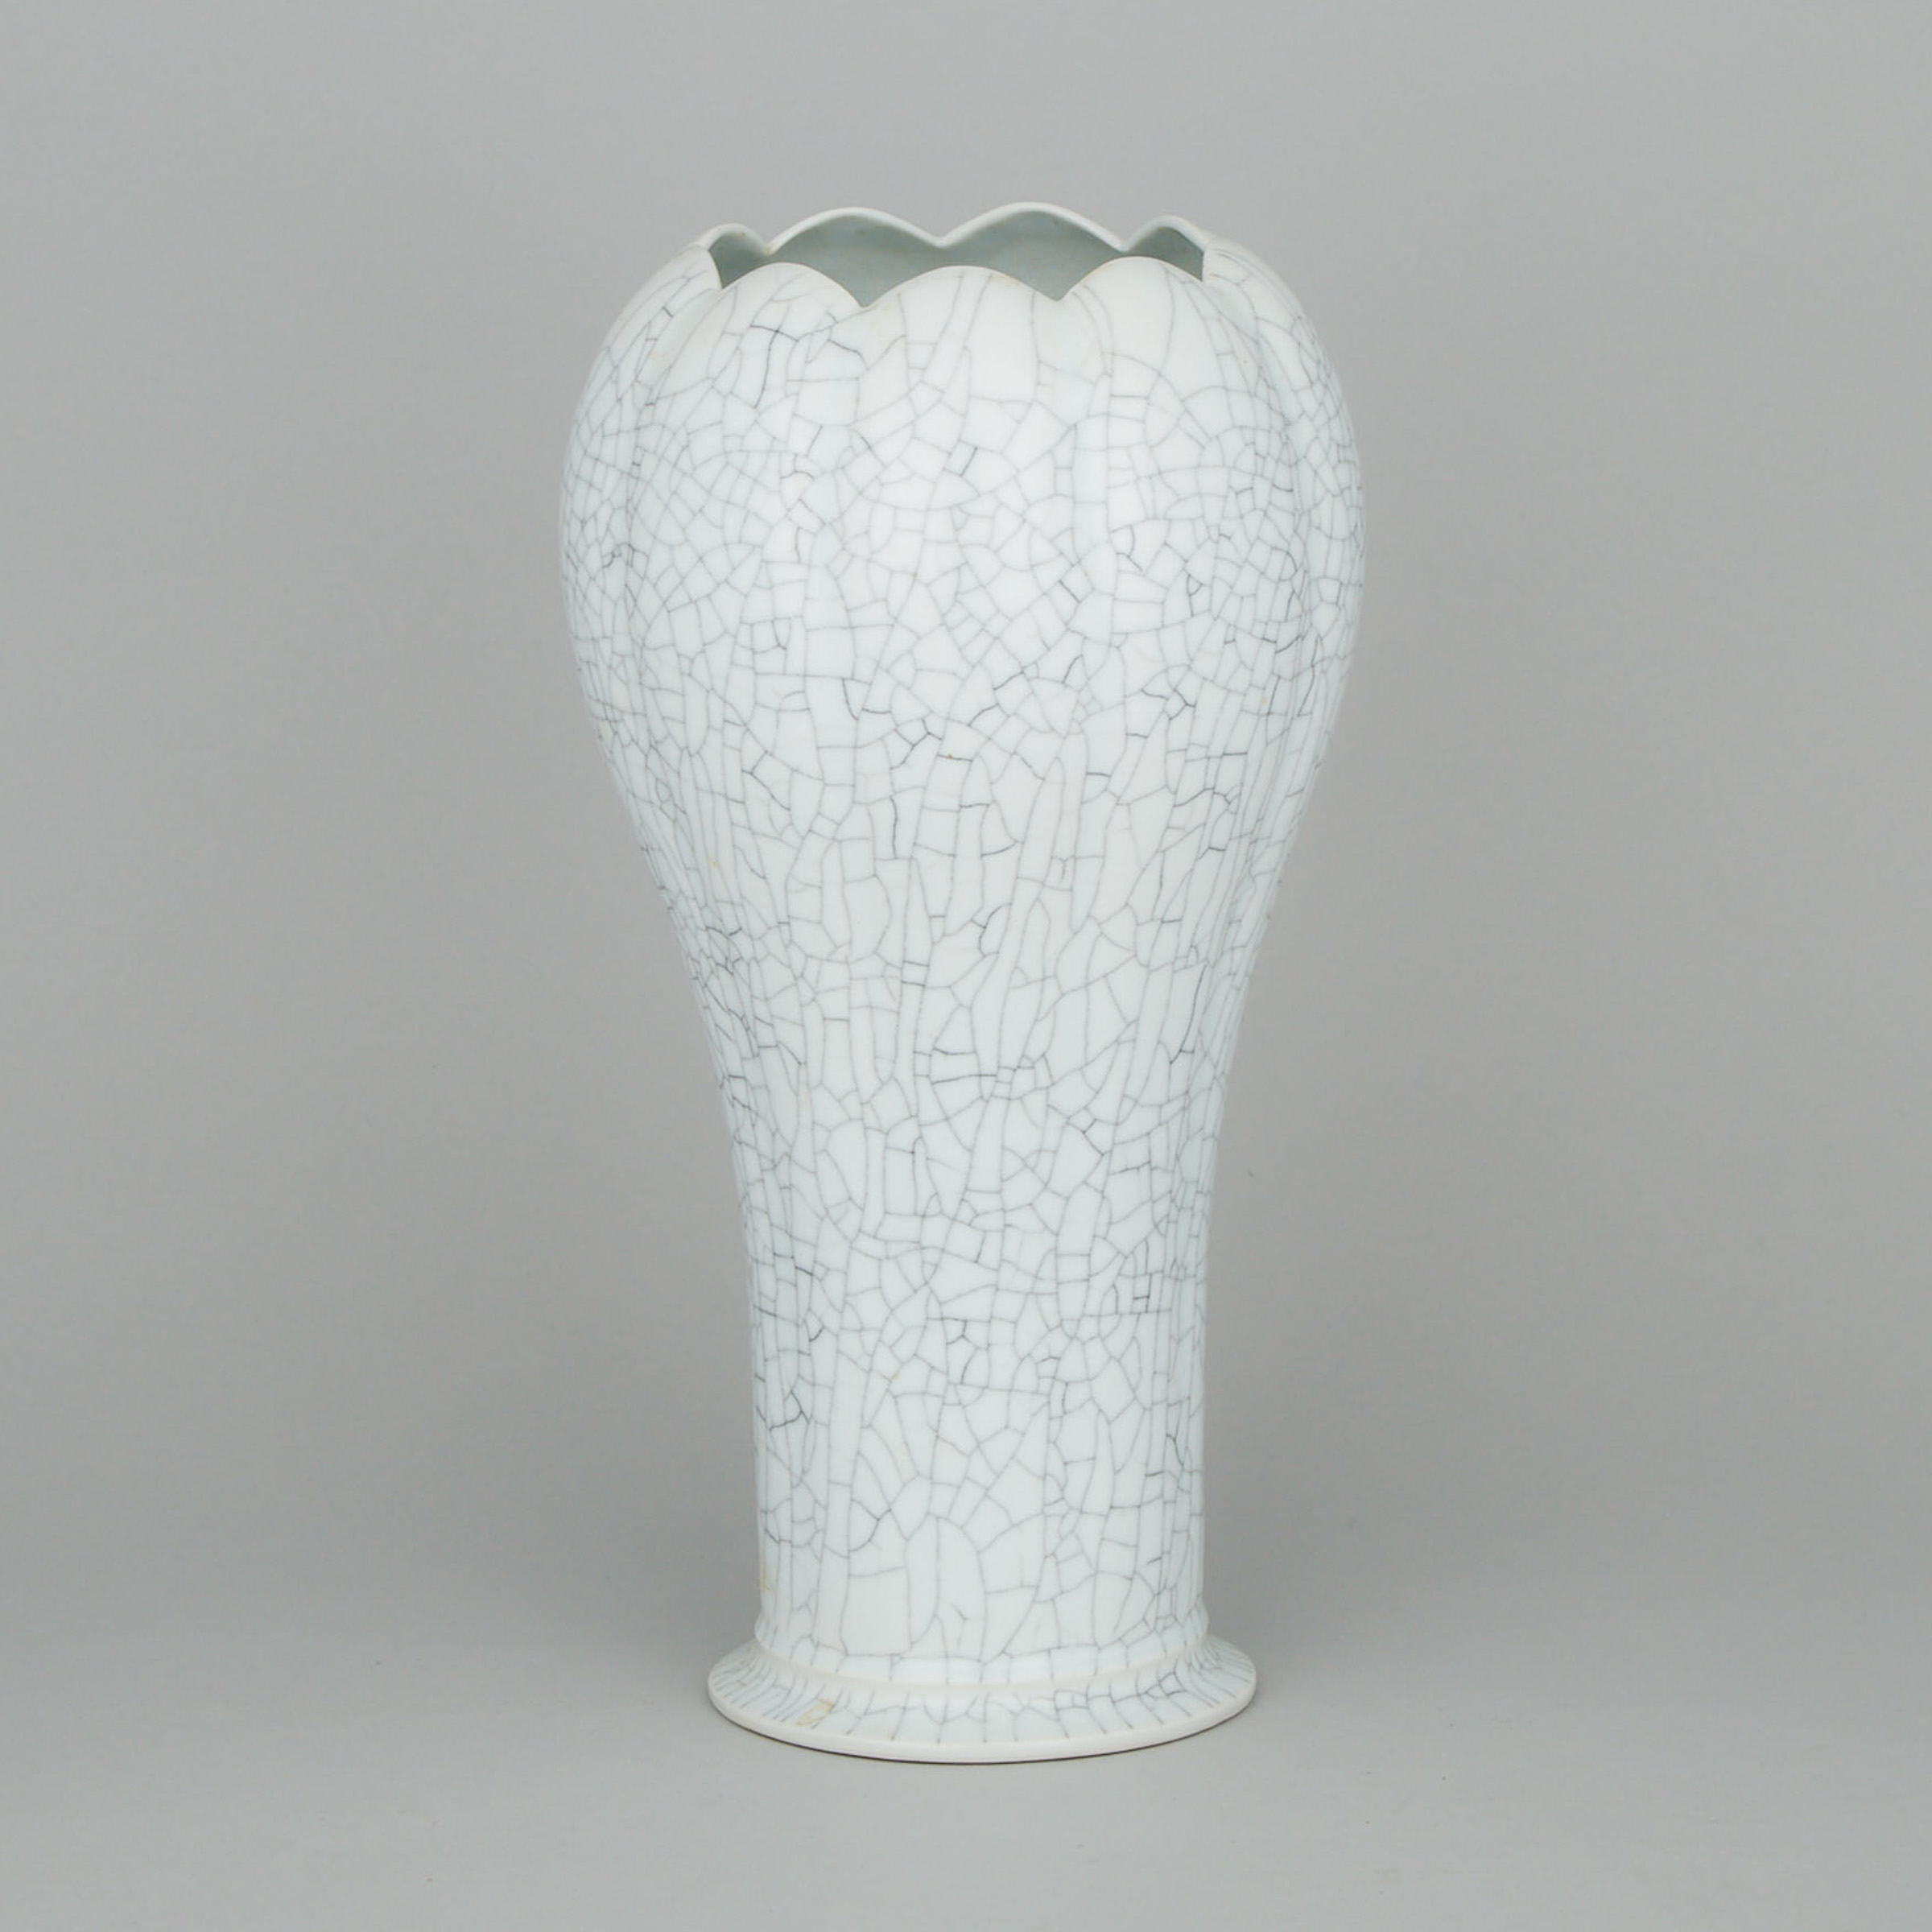 Bill Reddick (Canadian, b.1958), Crackle Glazed Vase, 1999